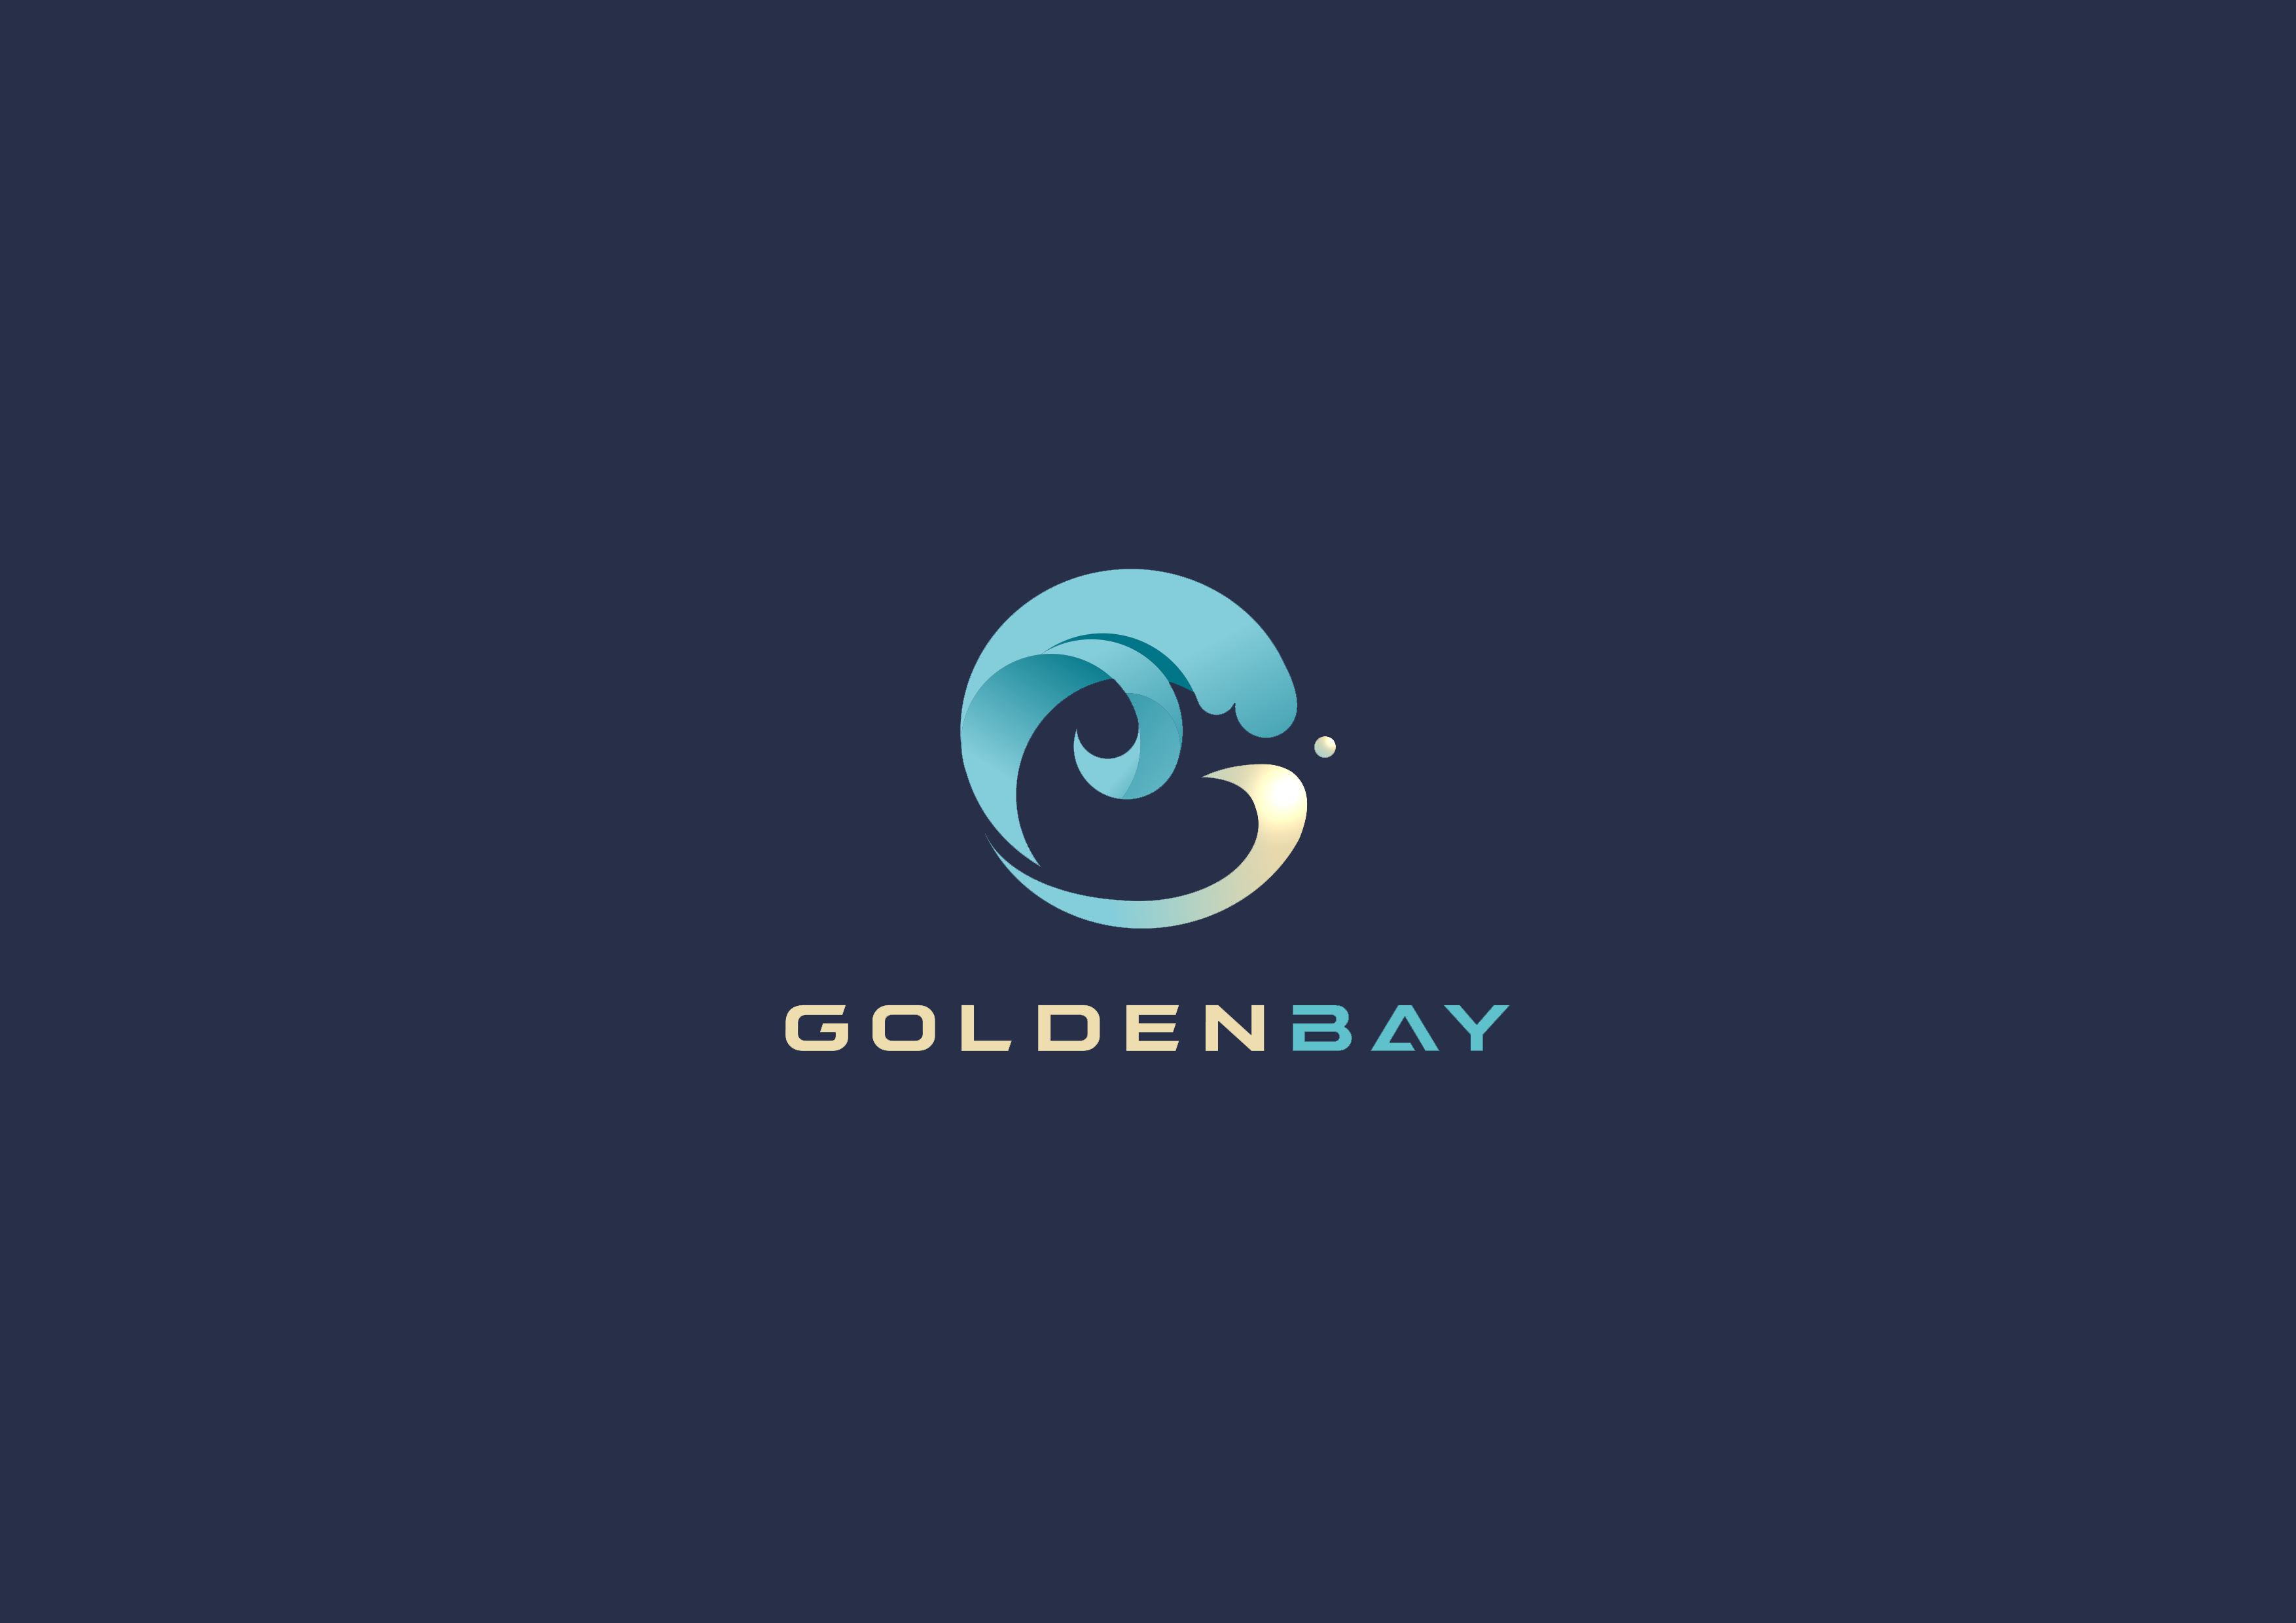 GB Goldenbay是其中一家列示在樂遊國際GamingSoft供應商數據庫裏的博弈軟件提供商 - 樂遊國際GamingSoft